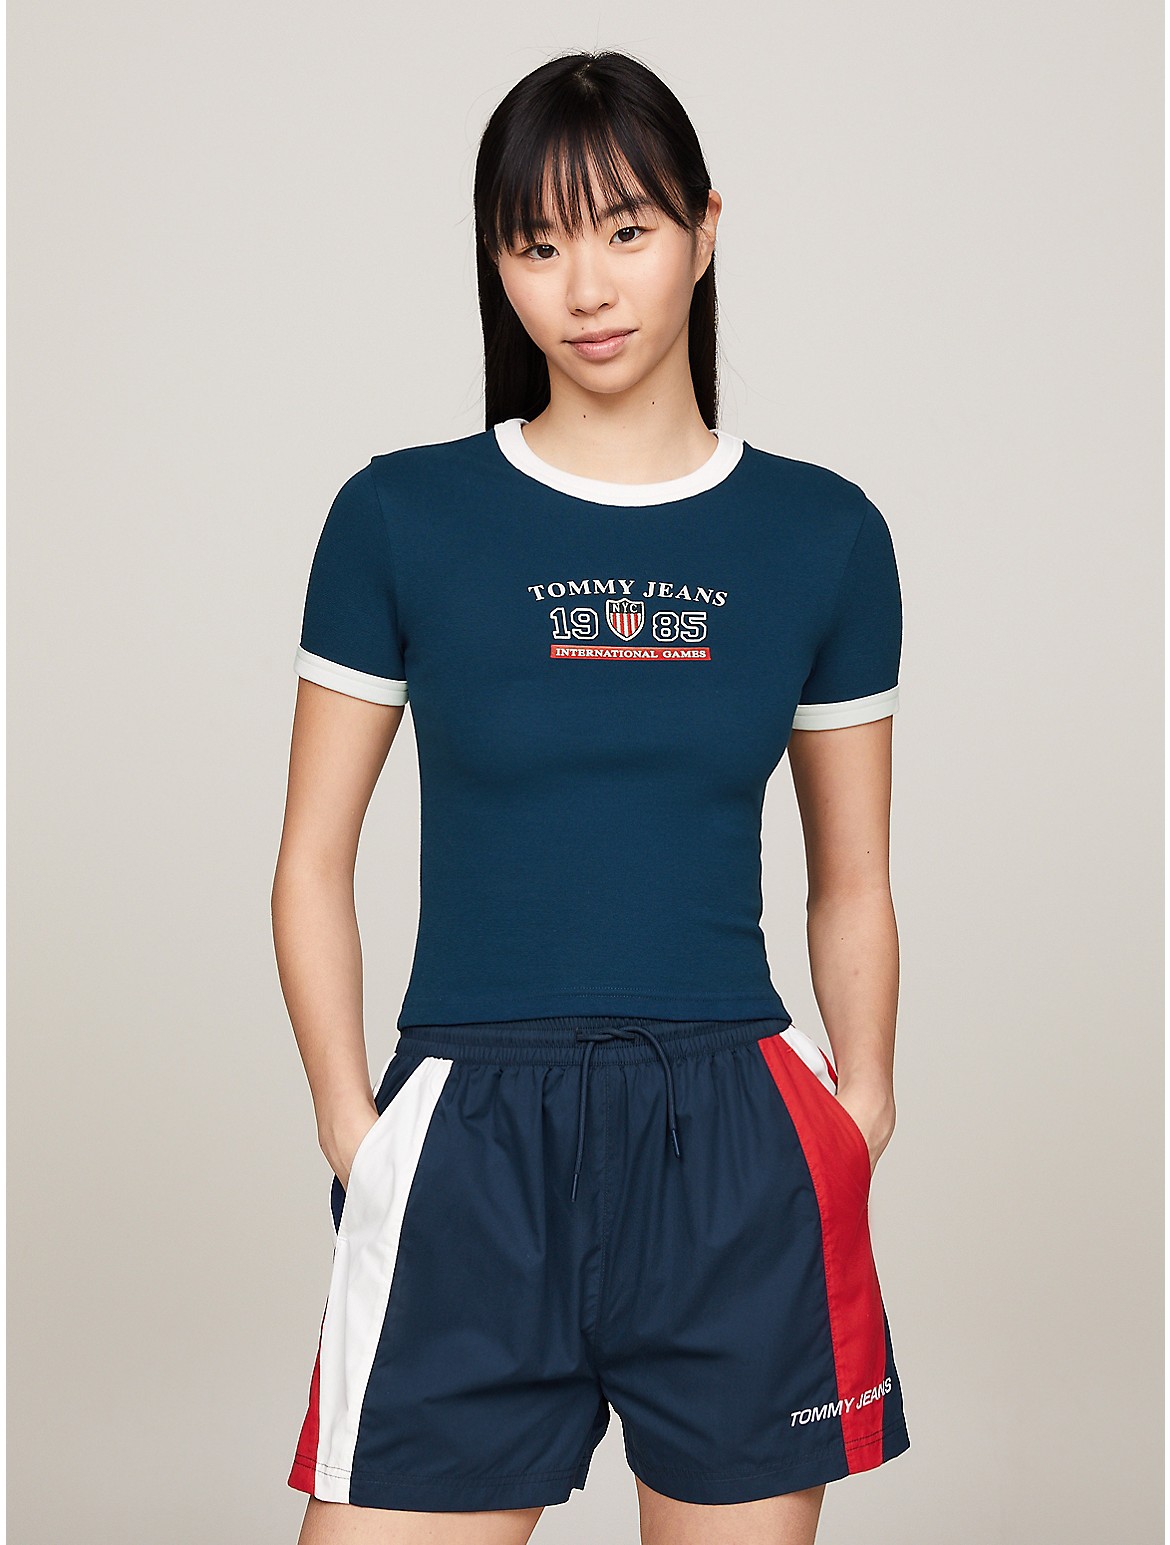 Tommy Hilfiger Women's TJ International Games Ringer T-Shirt